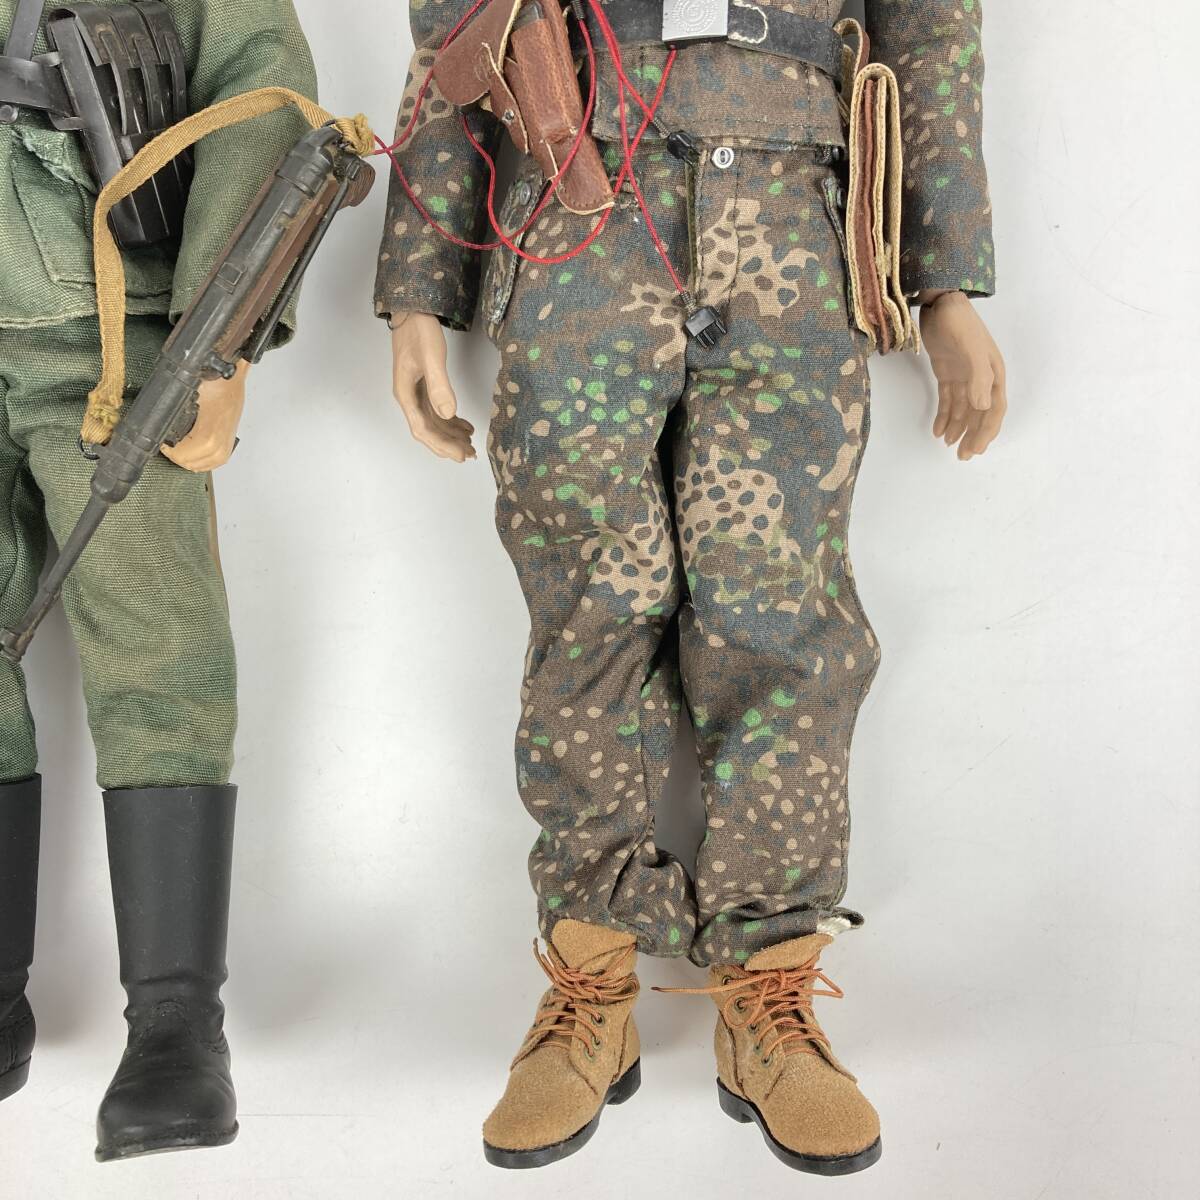  Takara G.I.JOE GI Joe производитель неизвестен товар милитари кукла совместно элемент body одежда Junk 